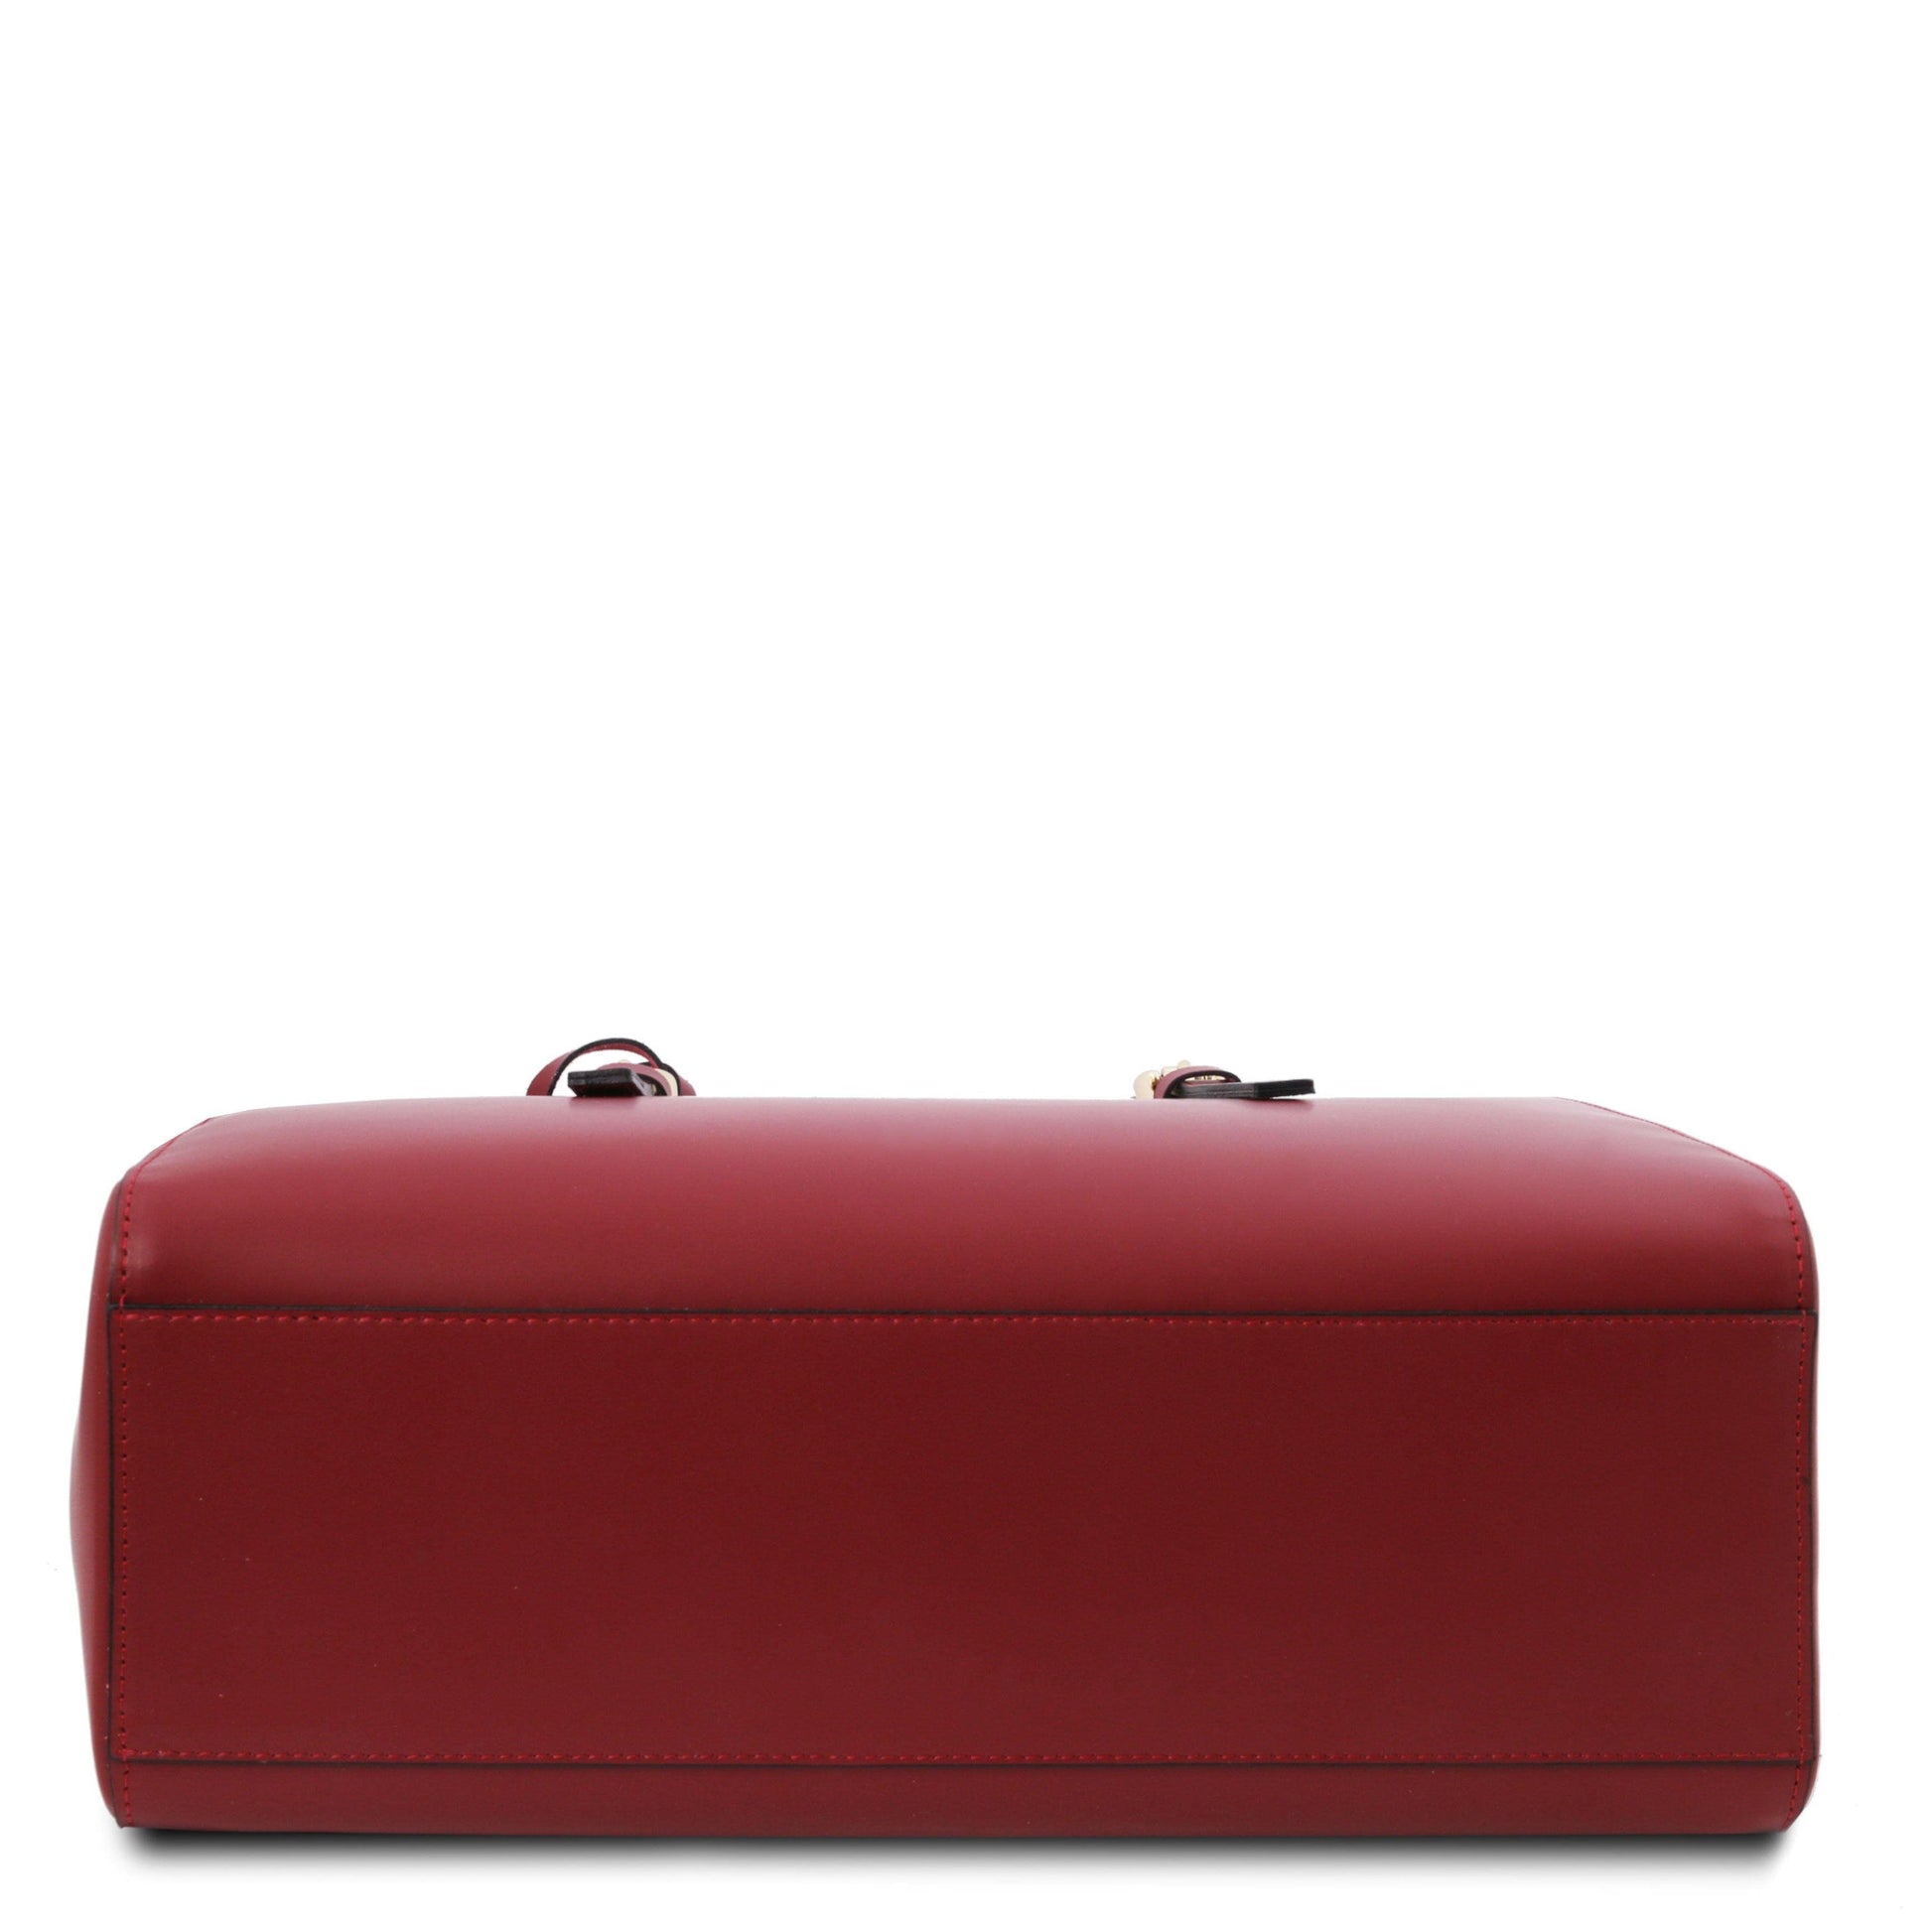 TL Bag - Leather shoulder bag | TL142037 - Premium Leather handbags - Shop now at San Rocco Italia